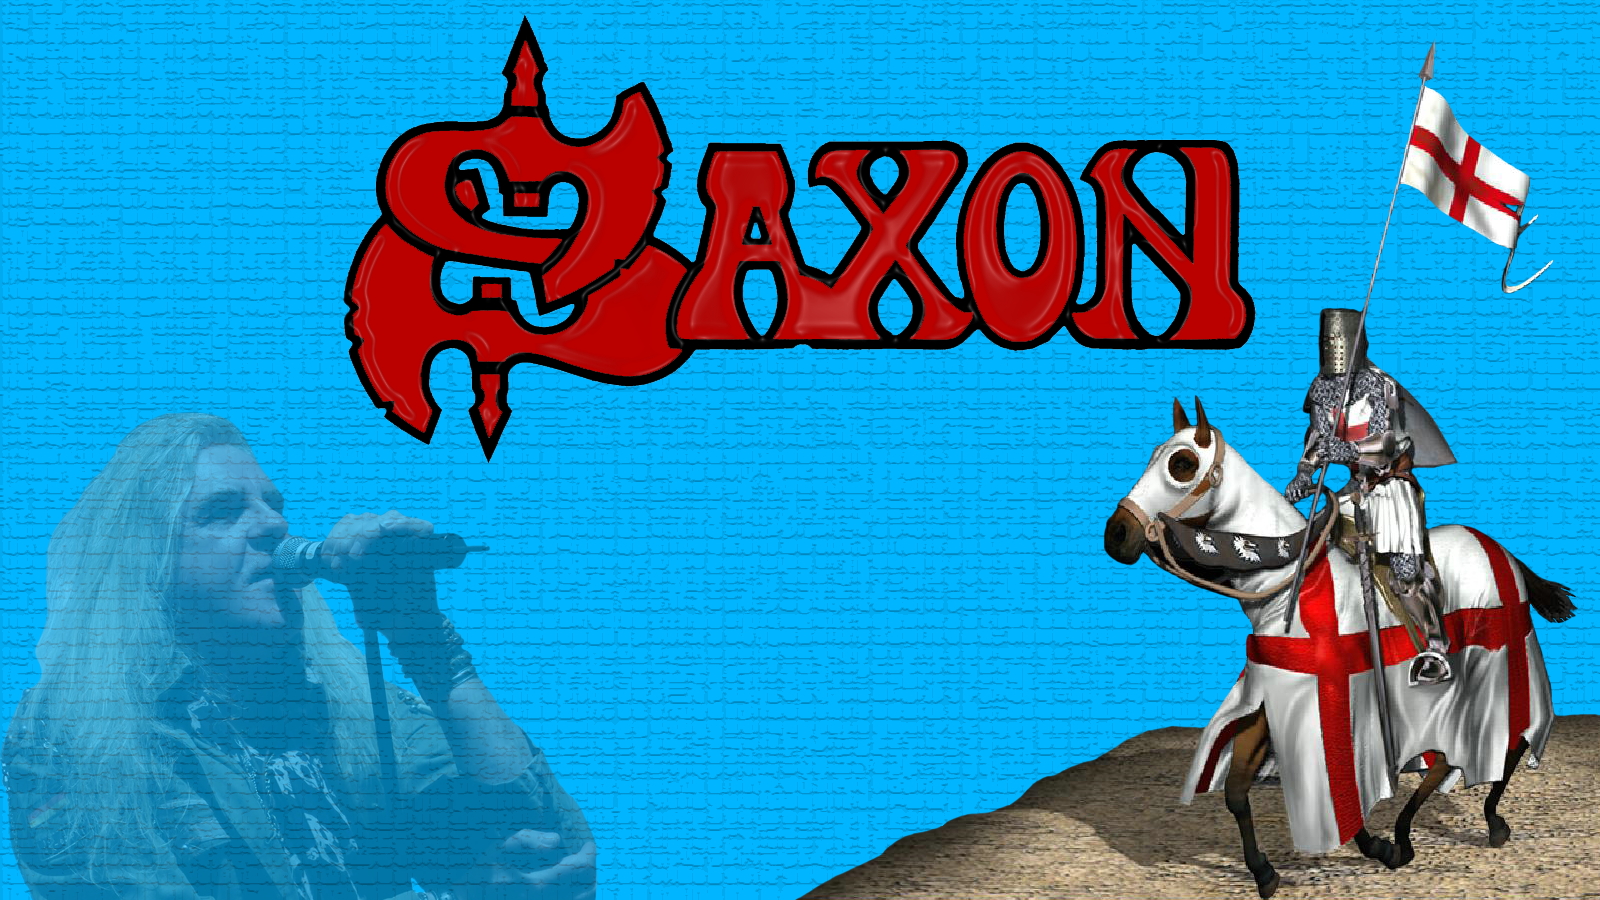 Saxon Desktop Background Image